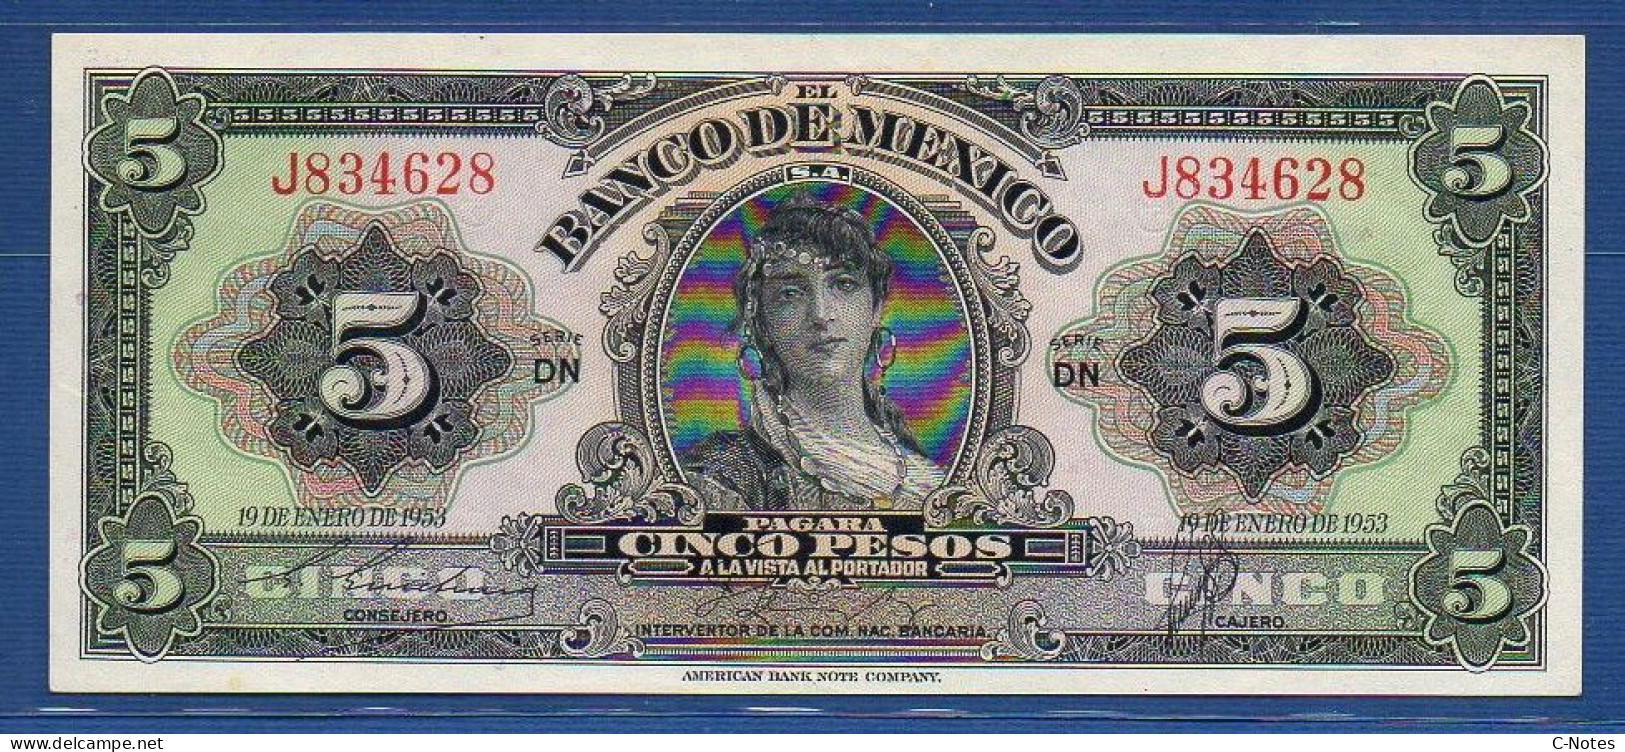 MEXICO - P. 57a – 5 Pesos 19-01-1953 XF, S/n DN J834628 - Mexico